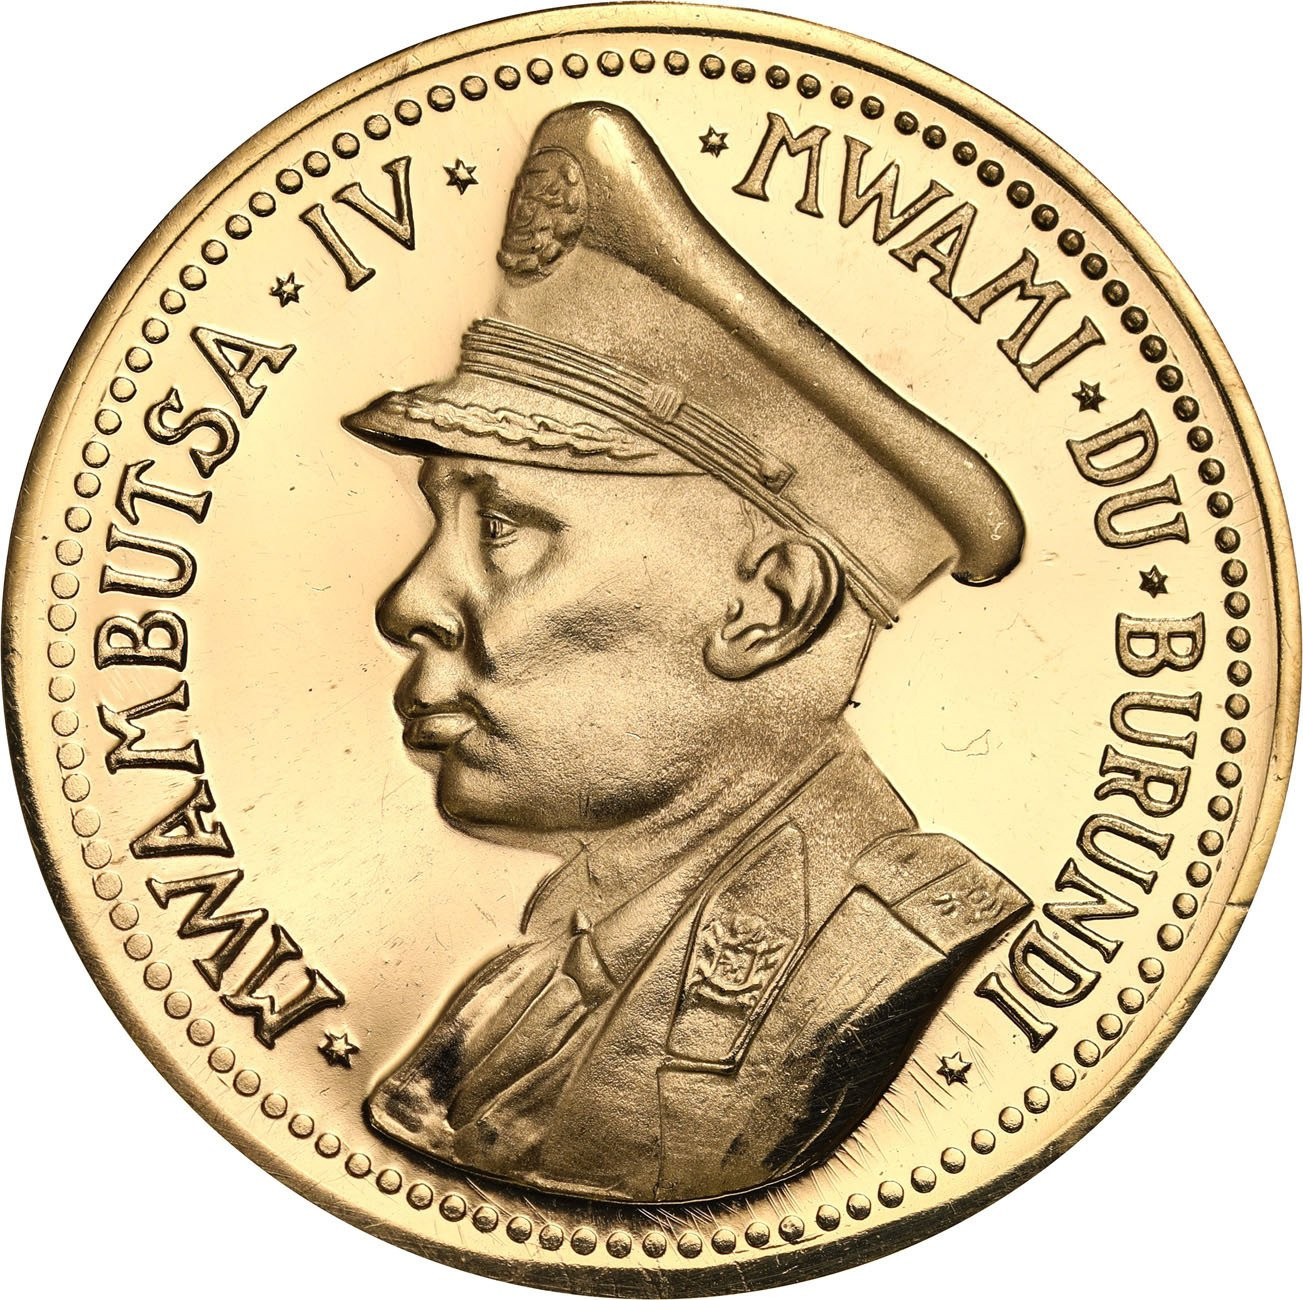 Republika Burundi, Mwambutsa IV Bangiricenge (1915–1966.) 50 franków 1962, Niepodległość Burundi